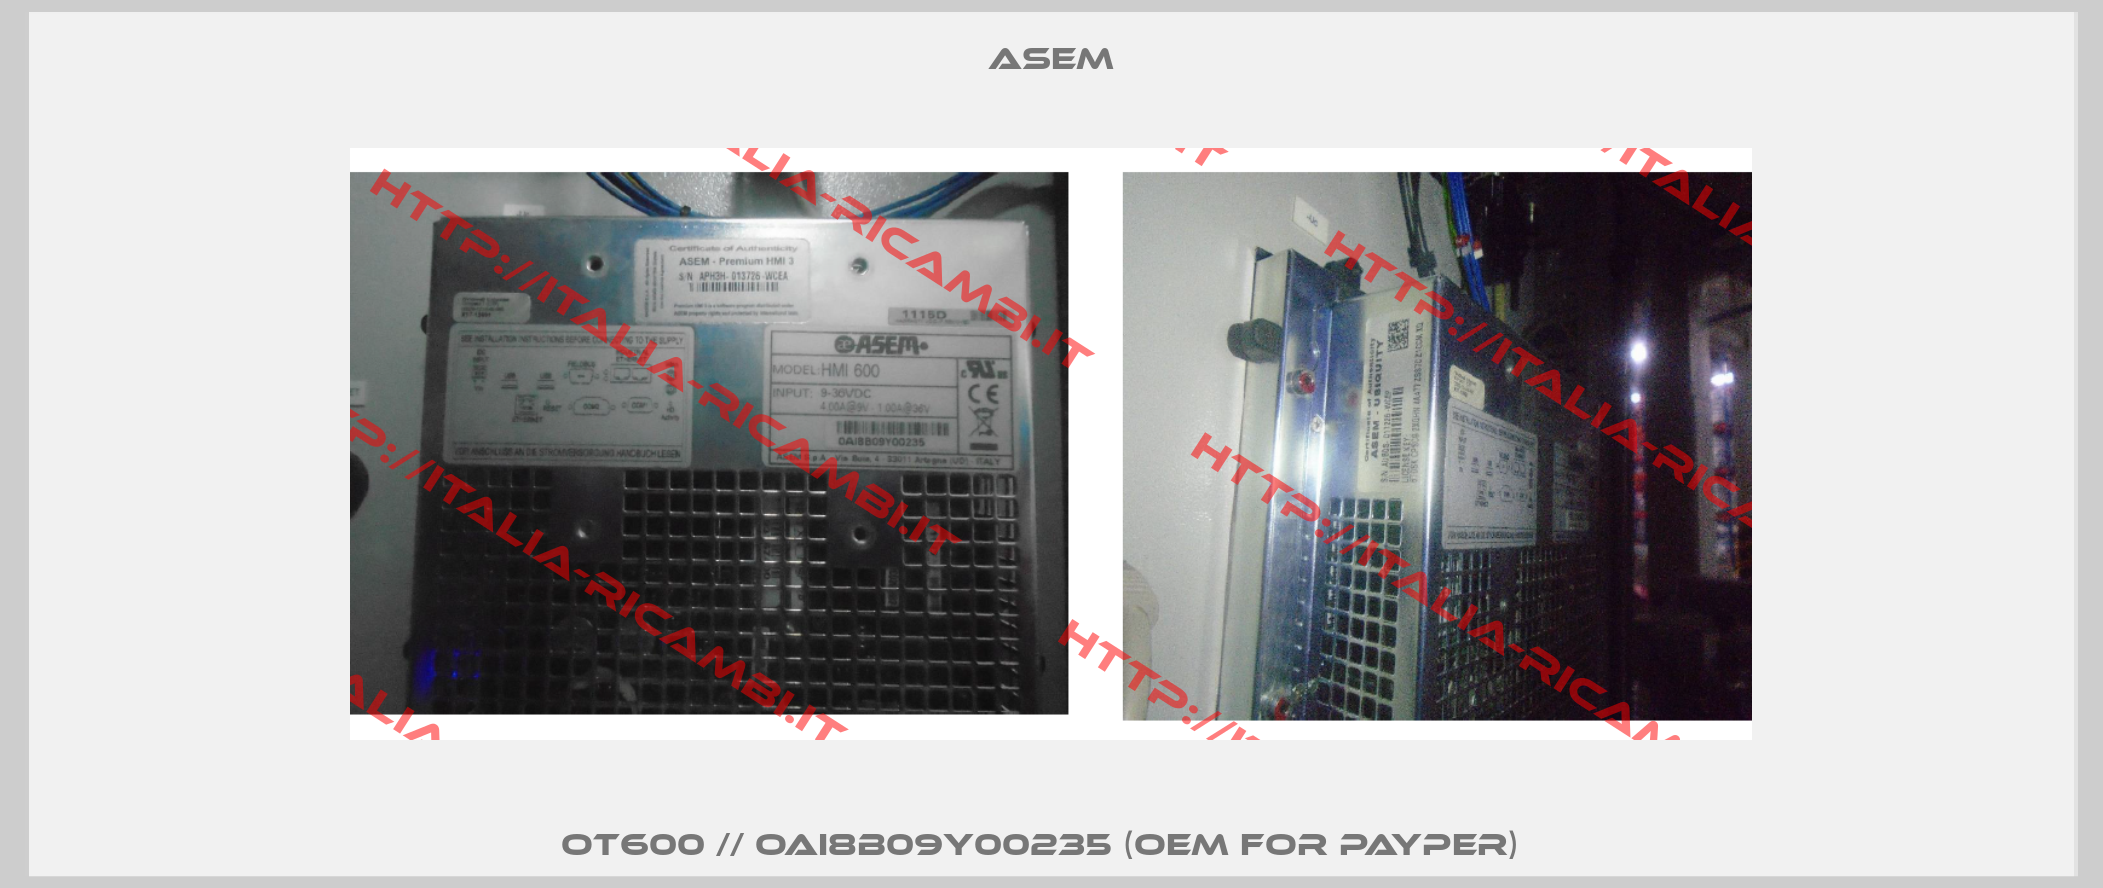 OT600 // OAI8B09Y00235 (OEM for Payper)  -1